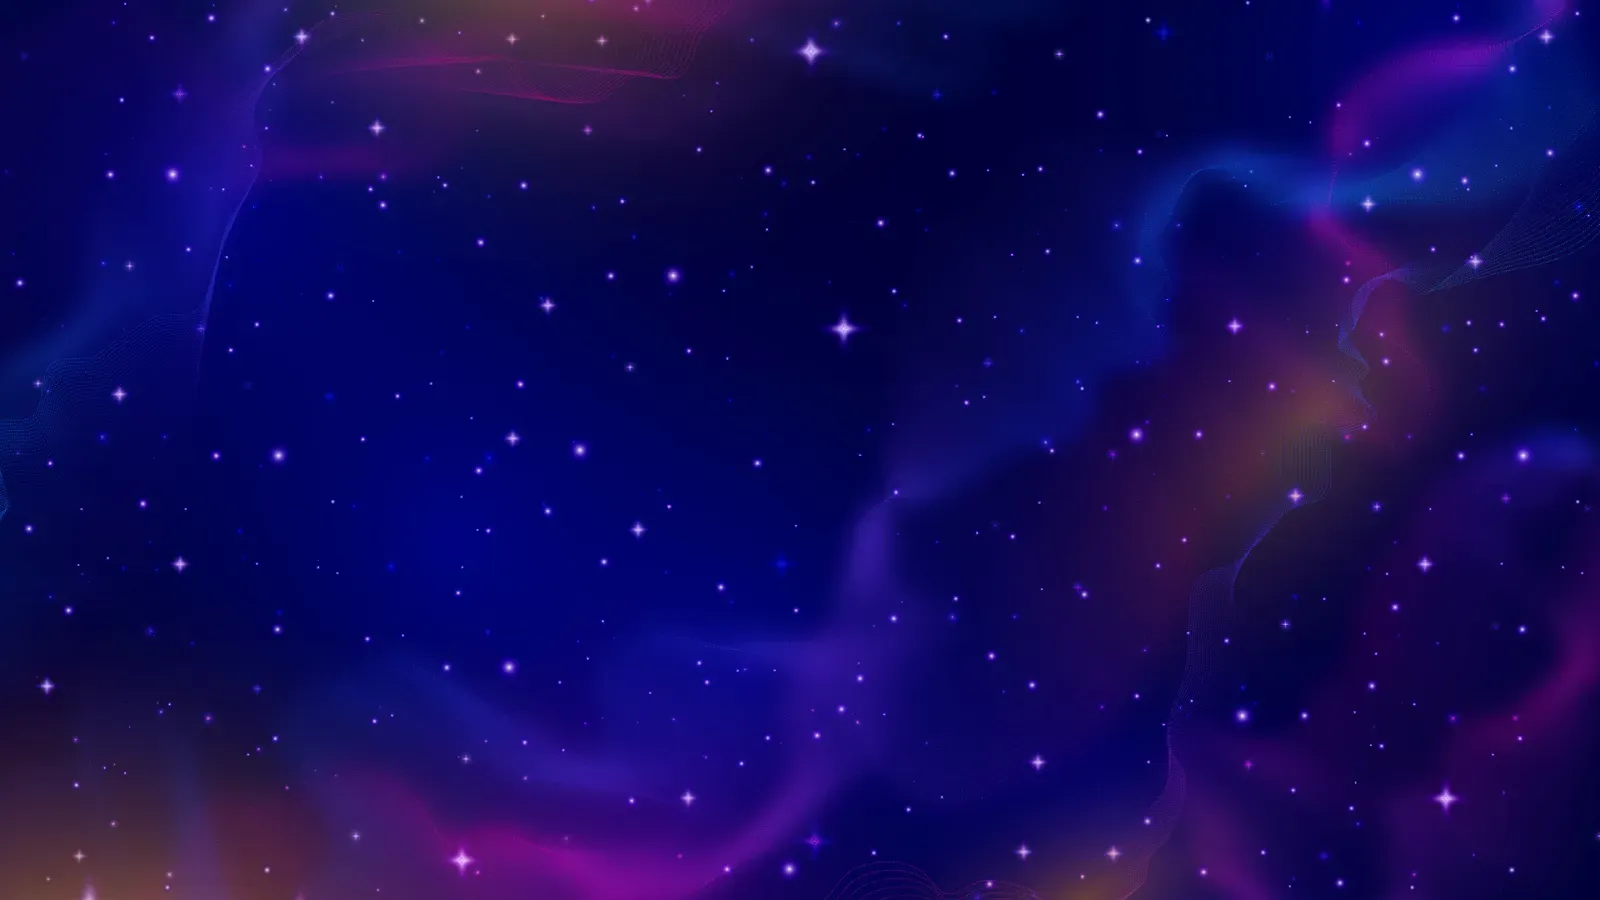 DARK SKY PC WALLPAPER 4K. Cosmic backdrop with twinkling stars and nebulous swirls on a deep blue-purple canvas.